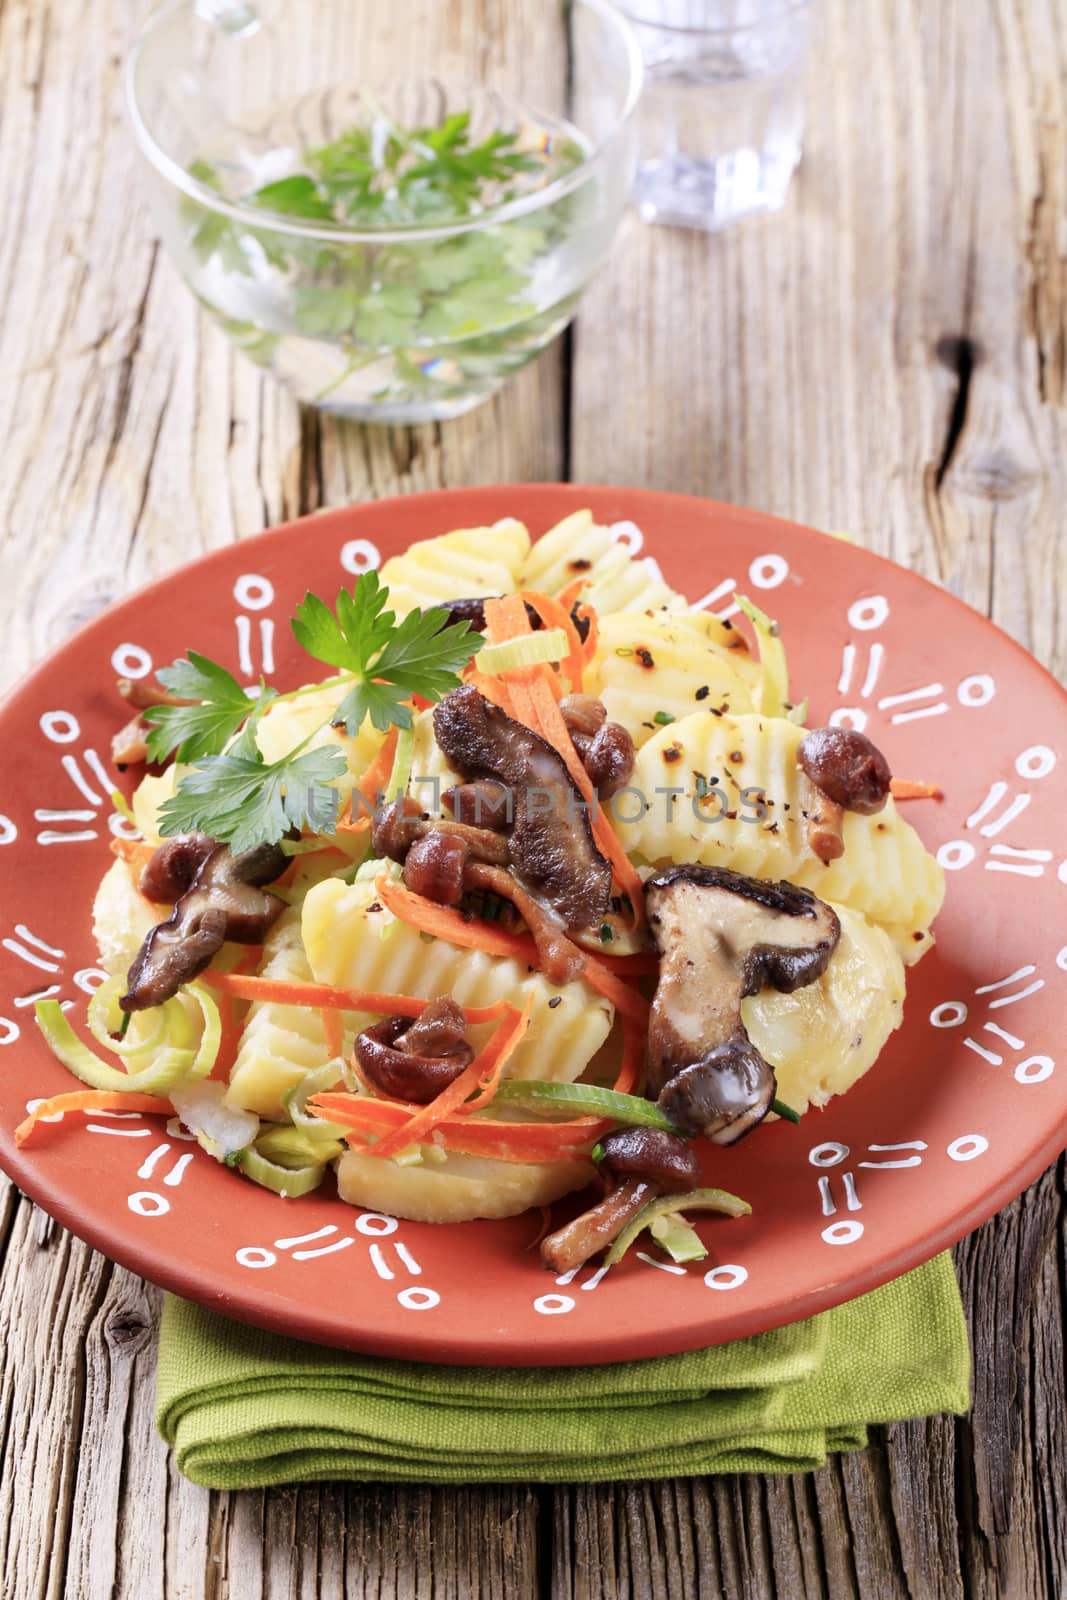 Vegetarian meal - Potato and mushroom salad 